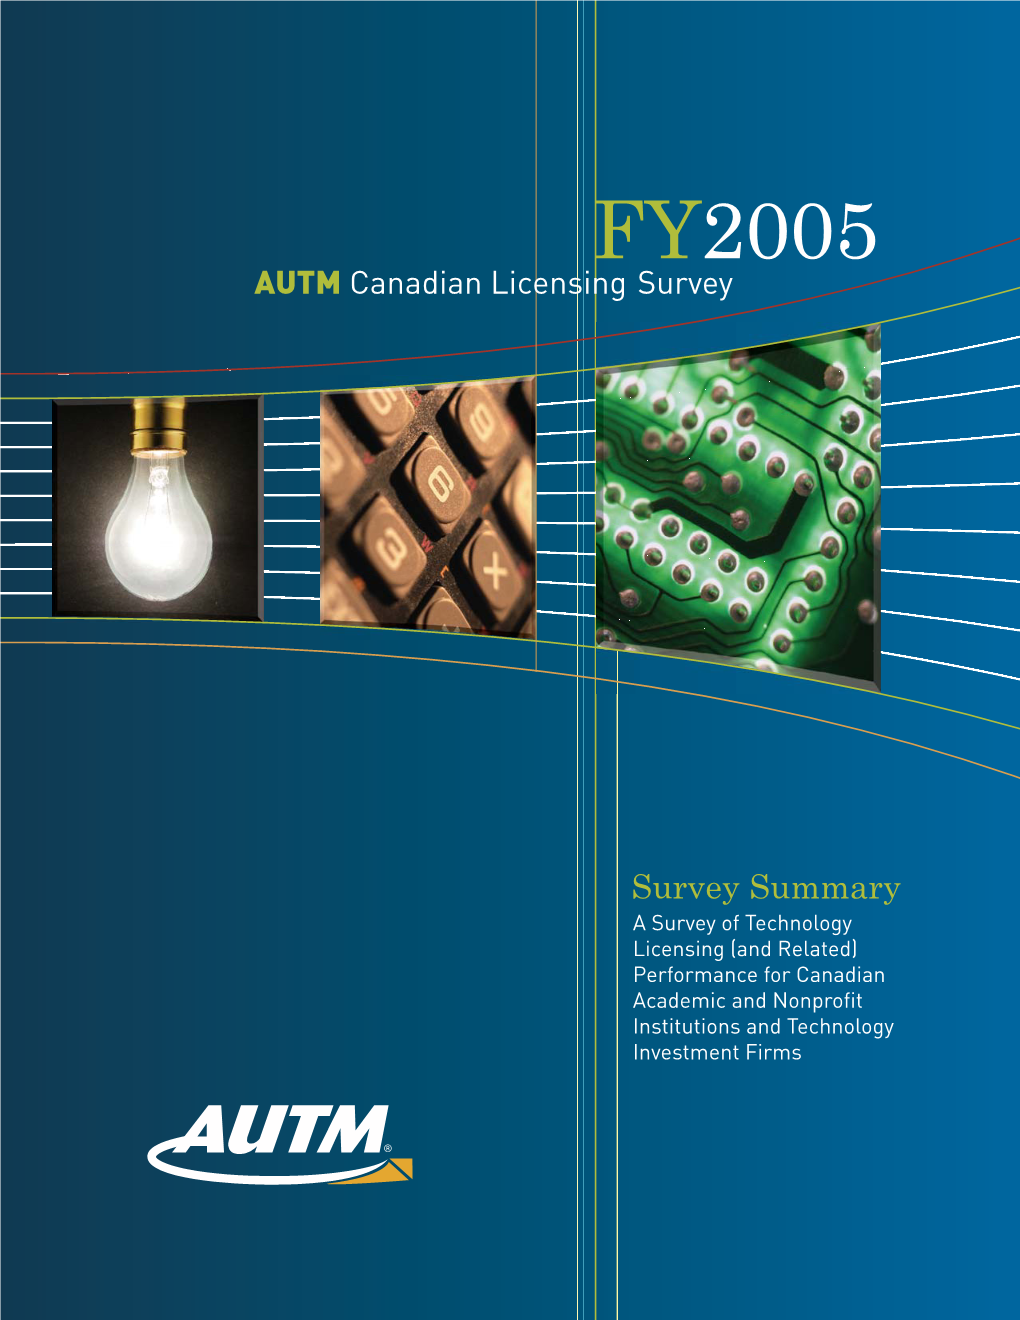 AUTM Canadian Licensing Survey FY 2005: Survey Summary